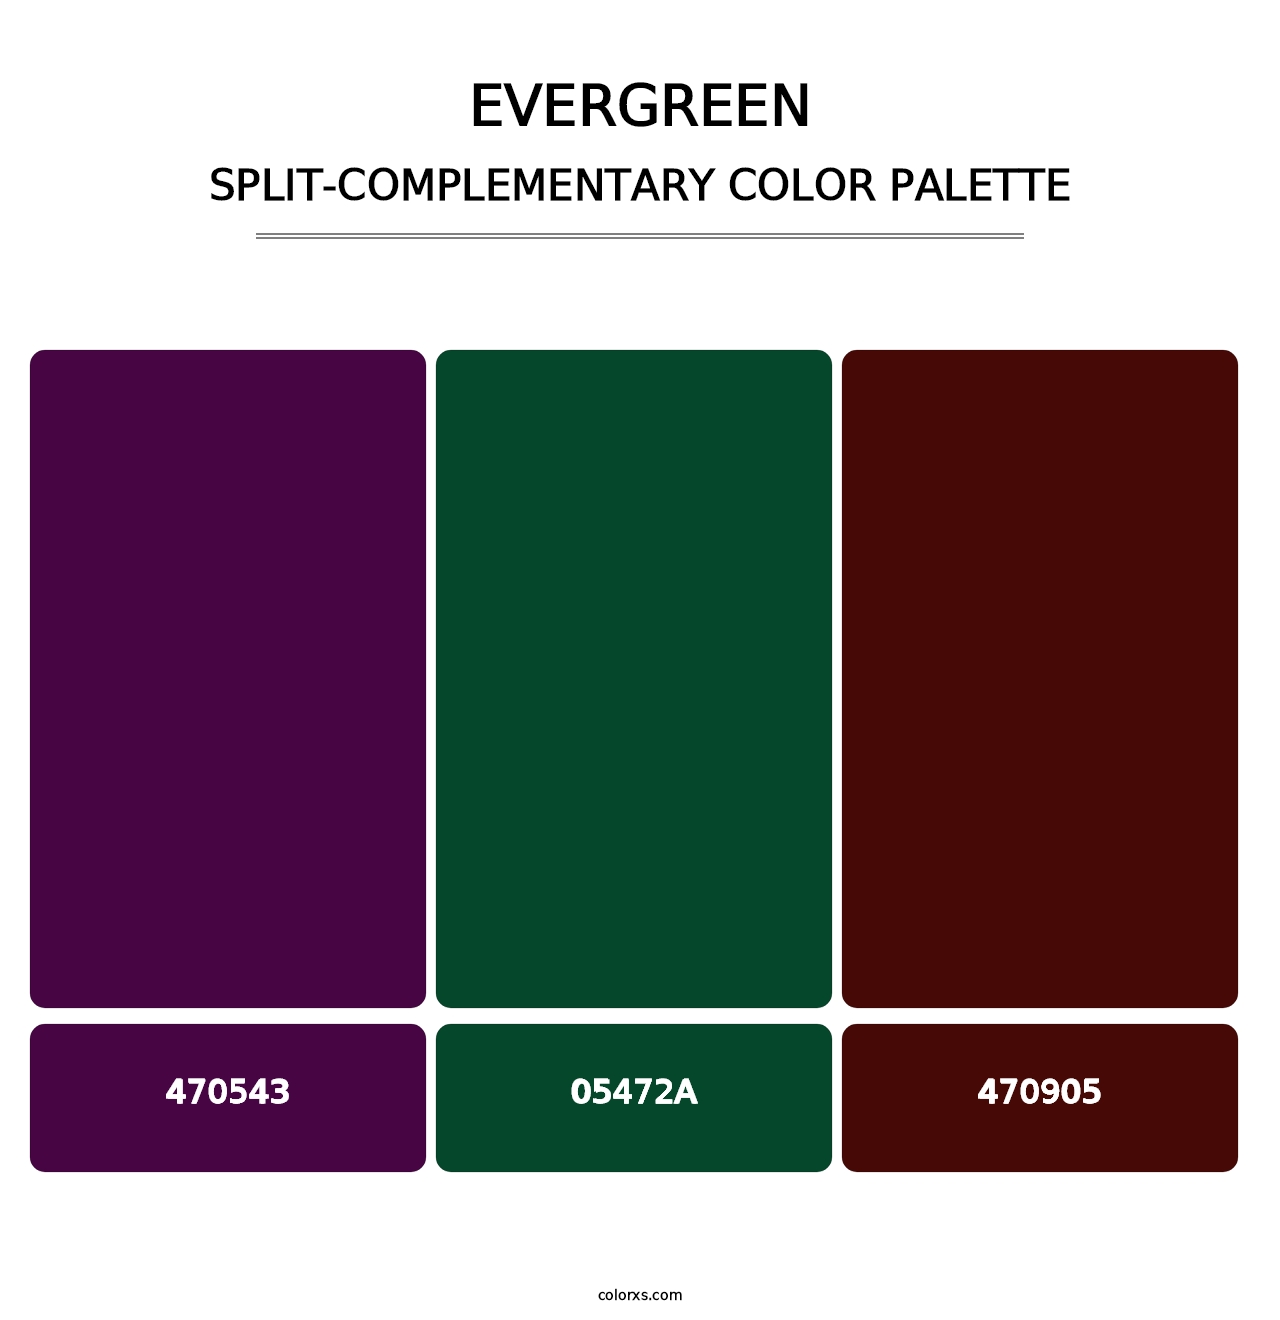 Evergreen - Split-Complementary Color Palette